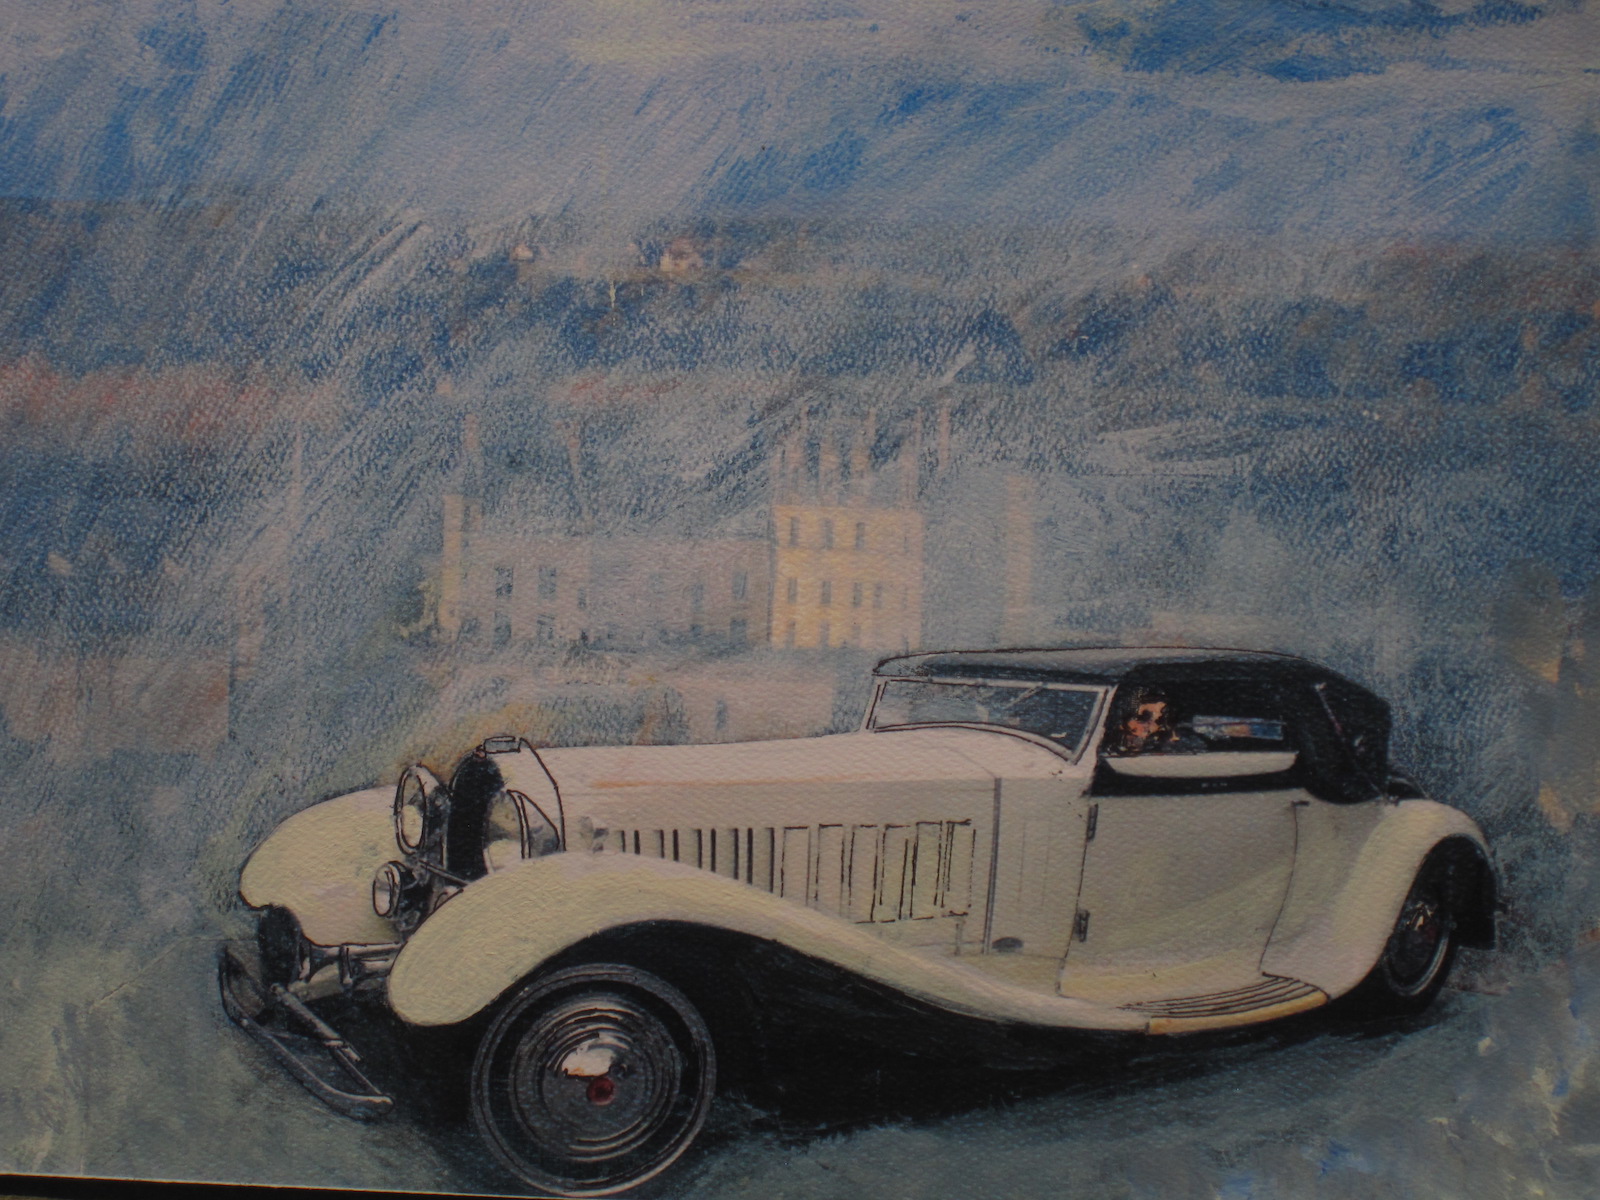 Think Big - Thought Ettore Bugatti